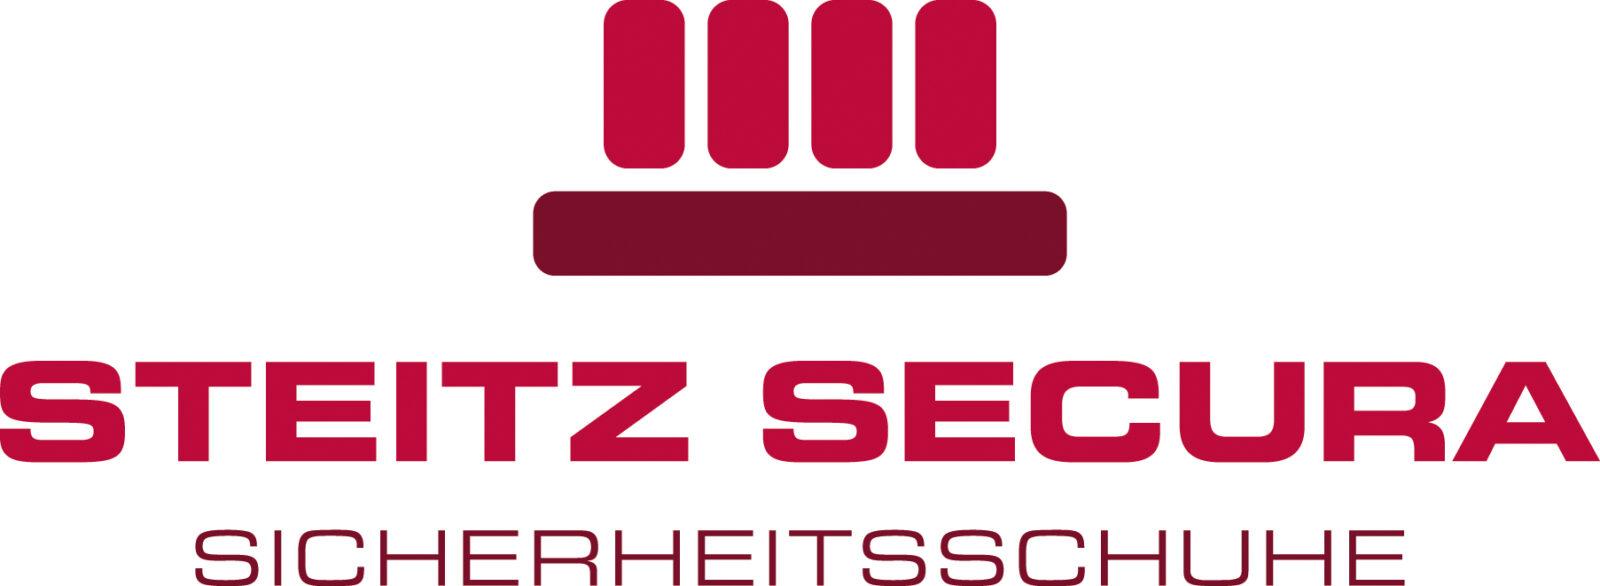 Louis Steitz Secura GmbH + 
Co. KG